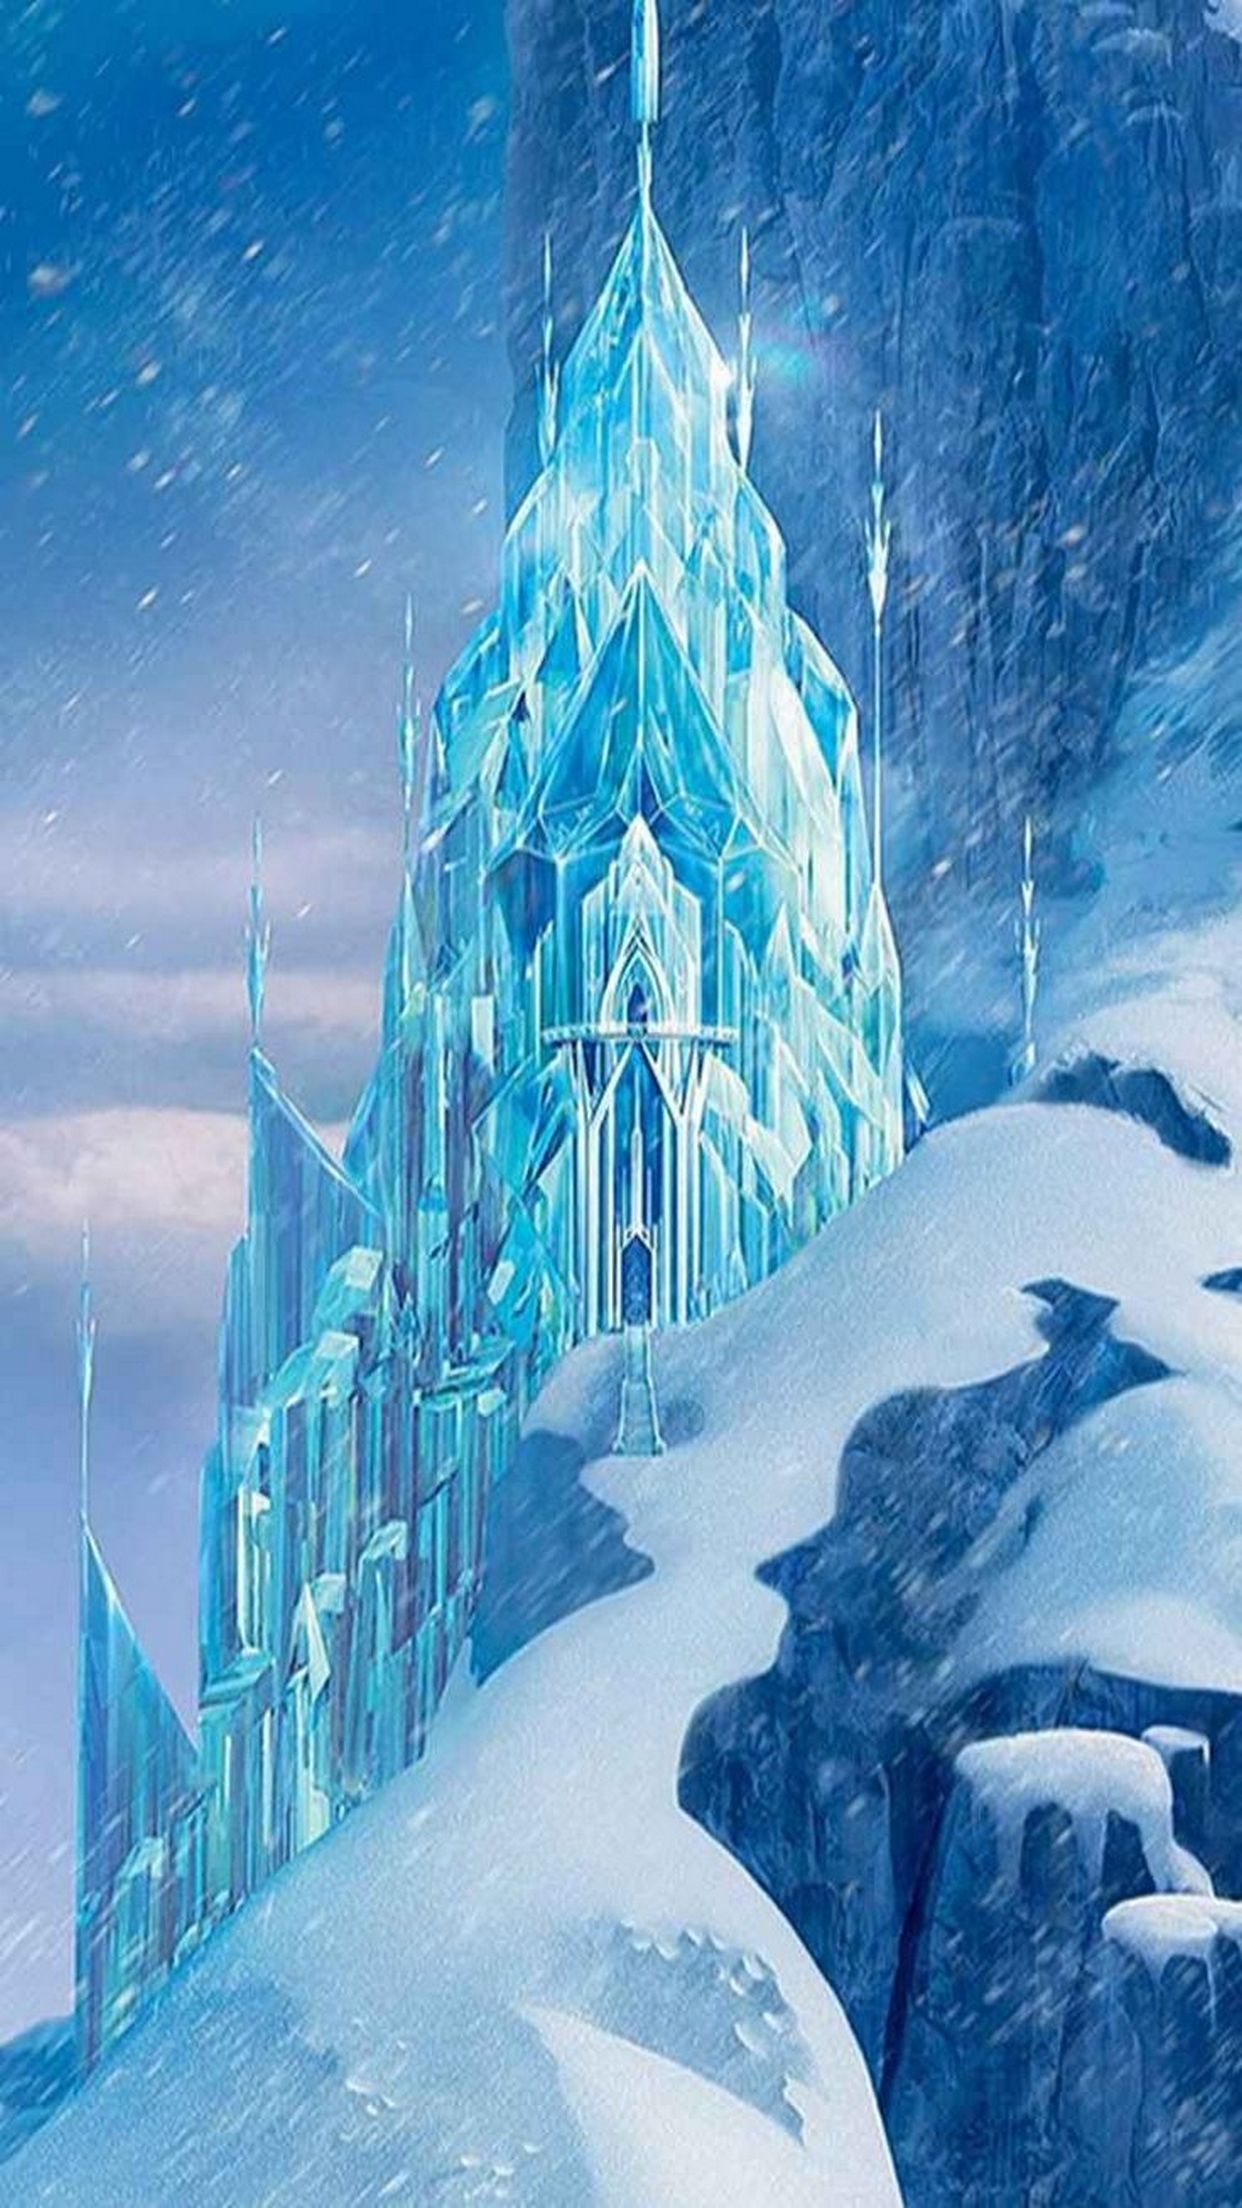 iPhone wallpaper 15. Frozen wallpaper, Frozen castle, Elsa castle